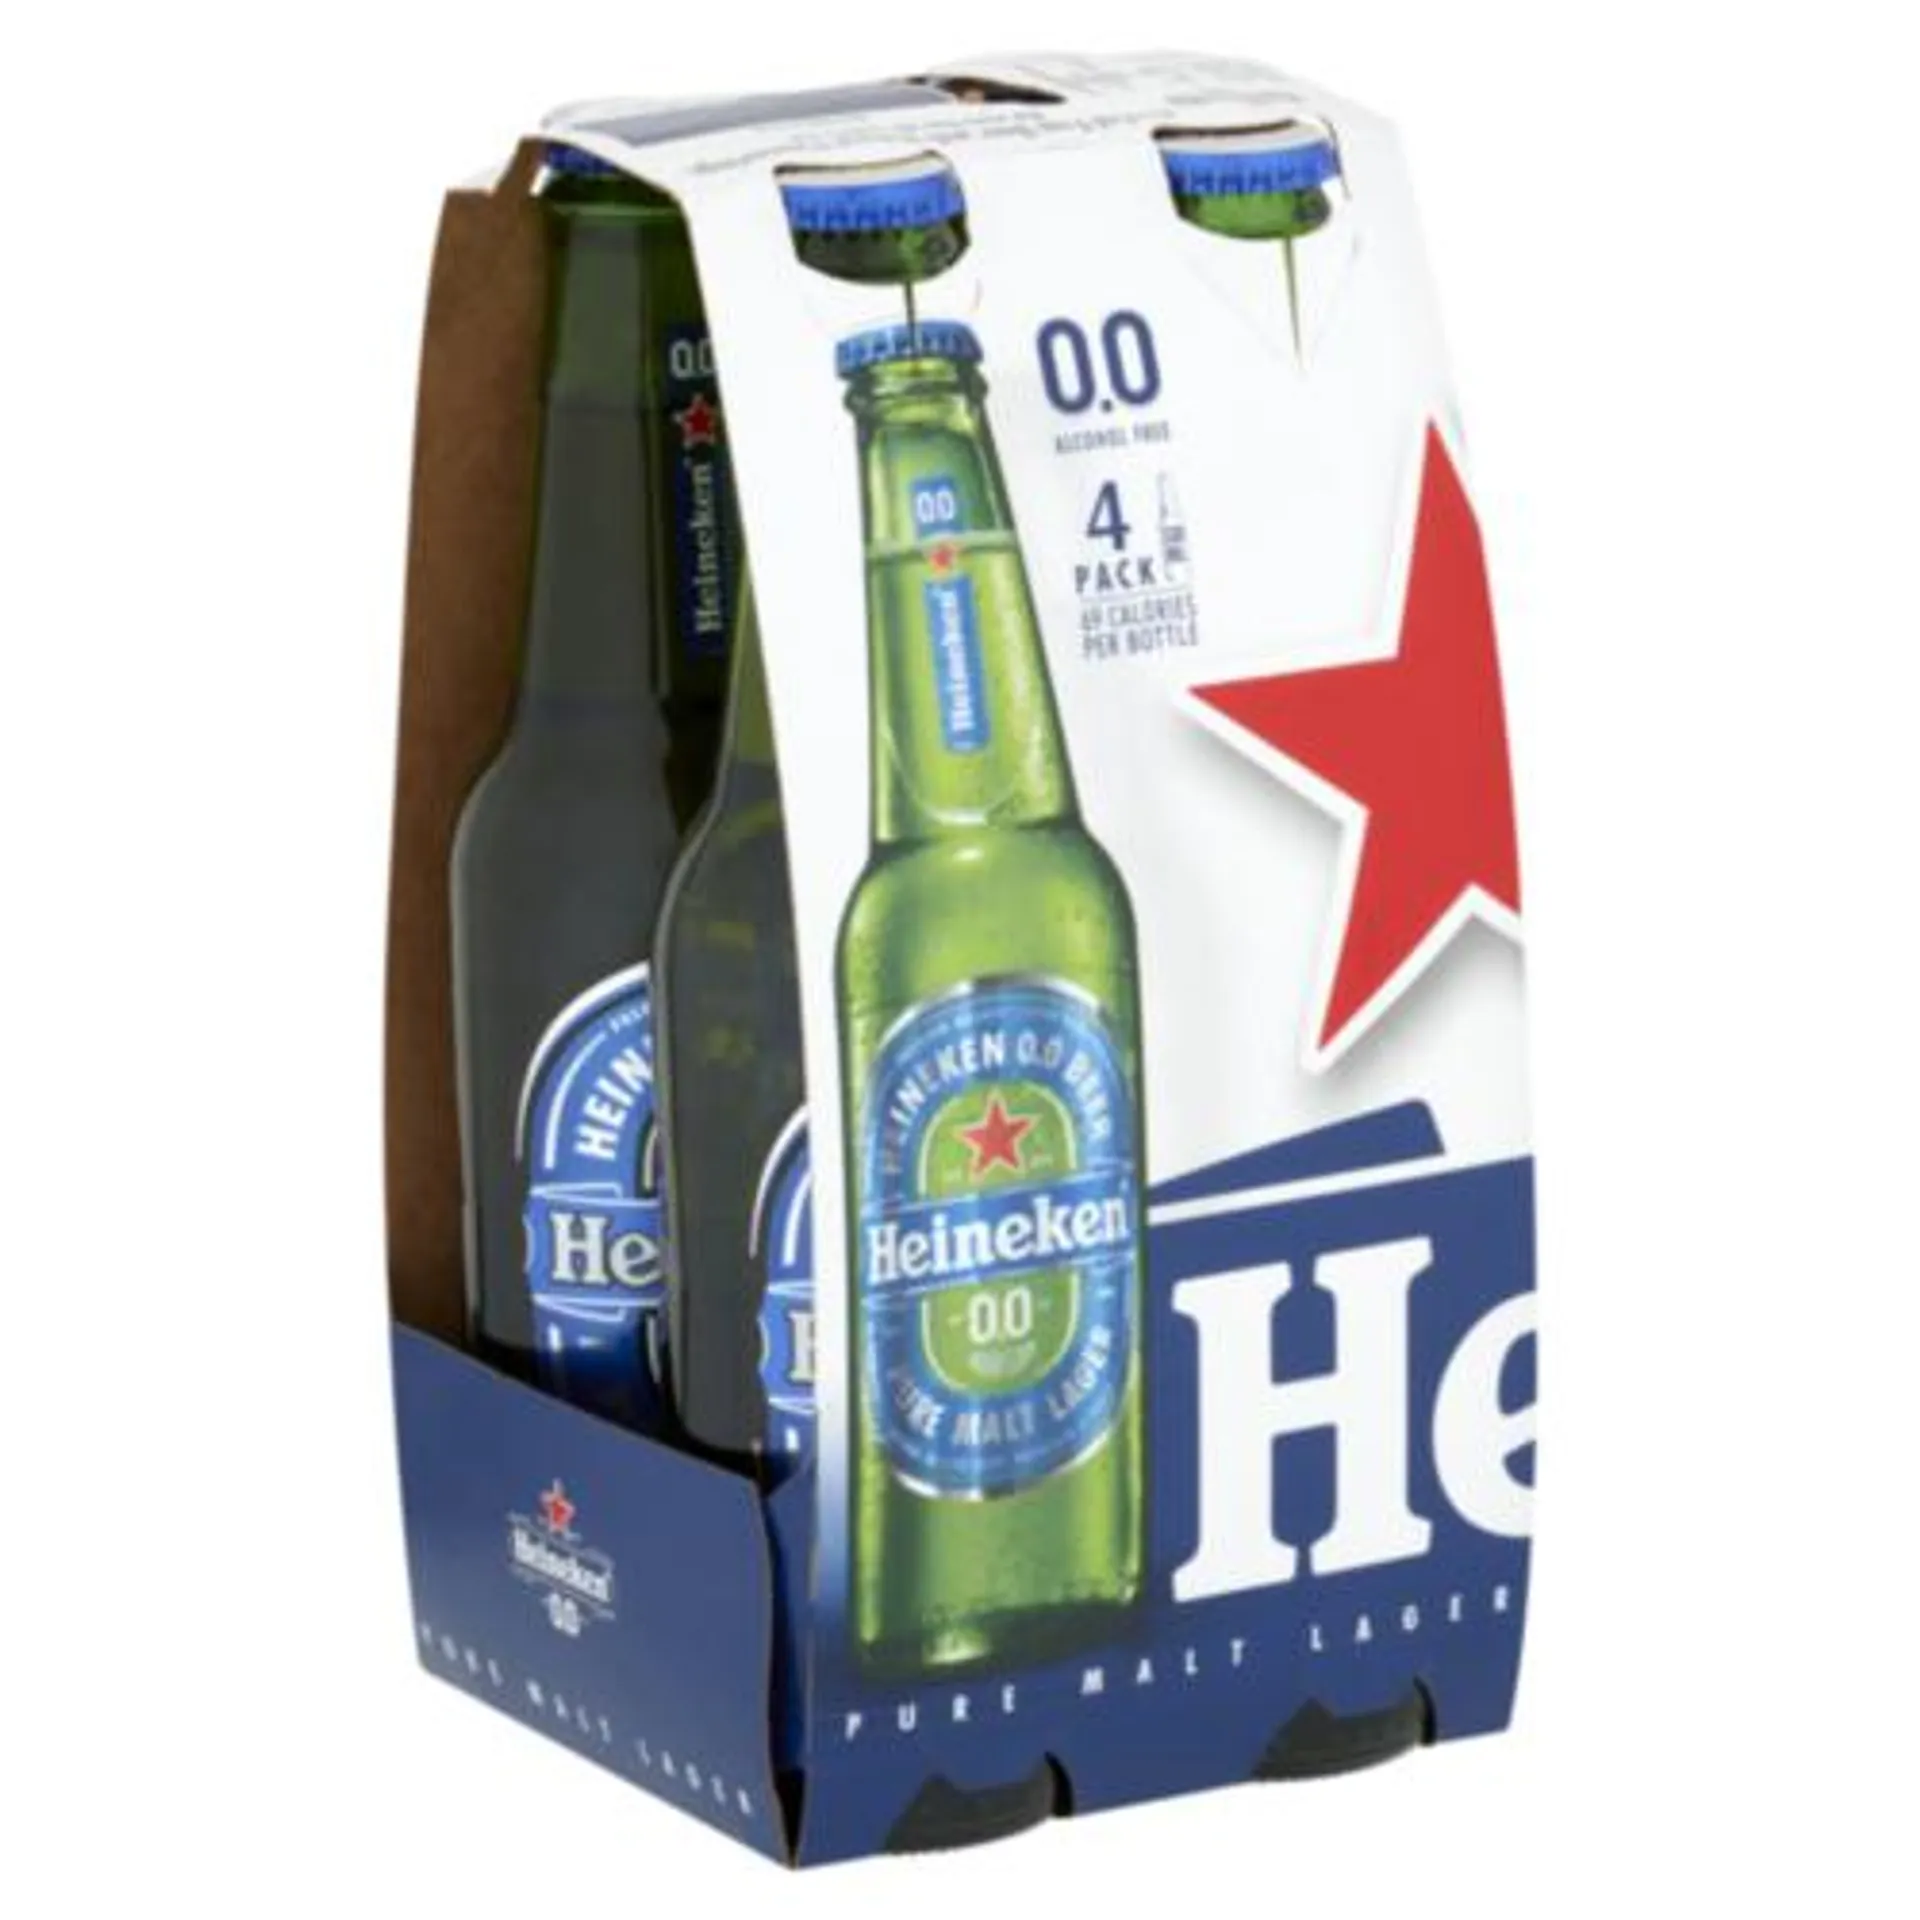 Heineken 0.0% Bottle 4 Pack